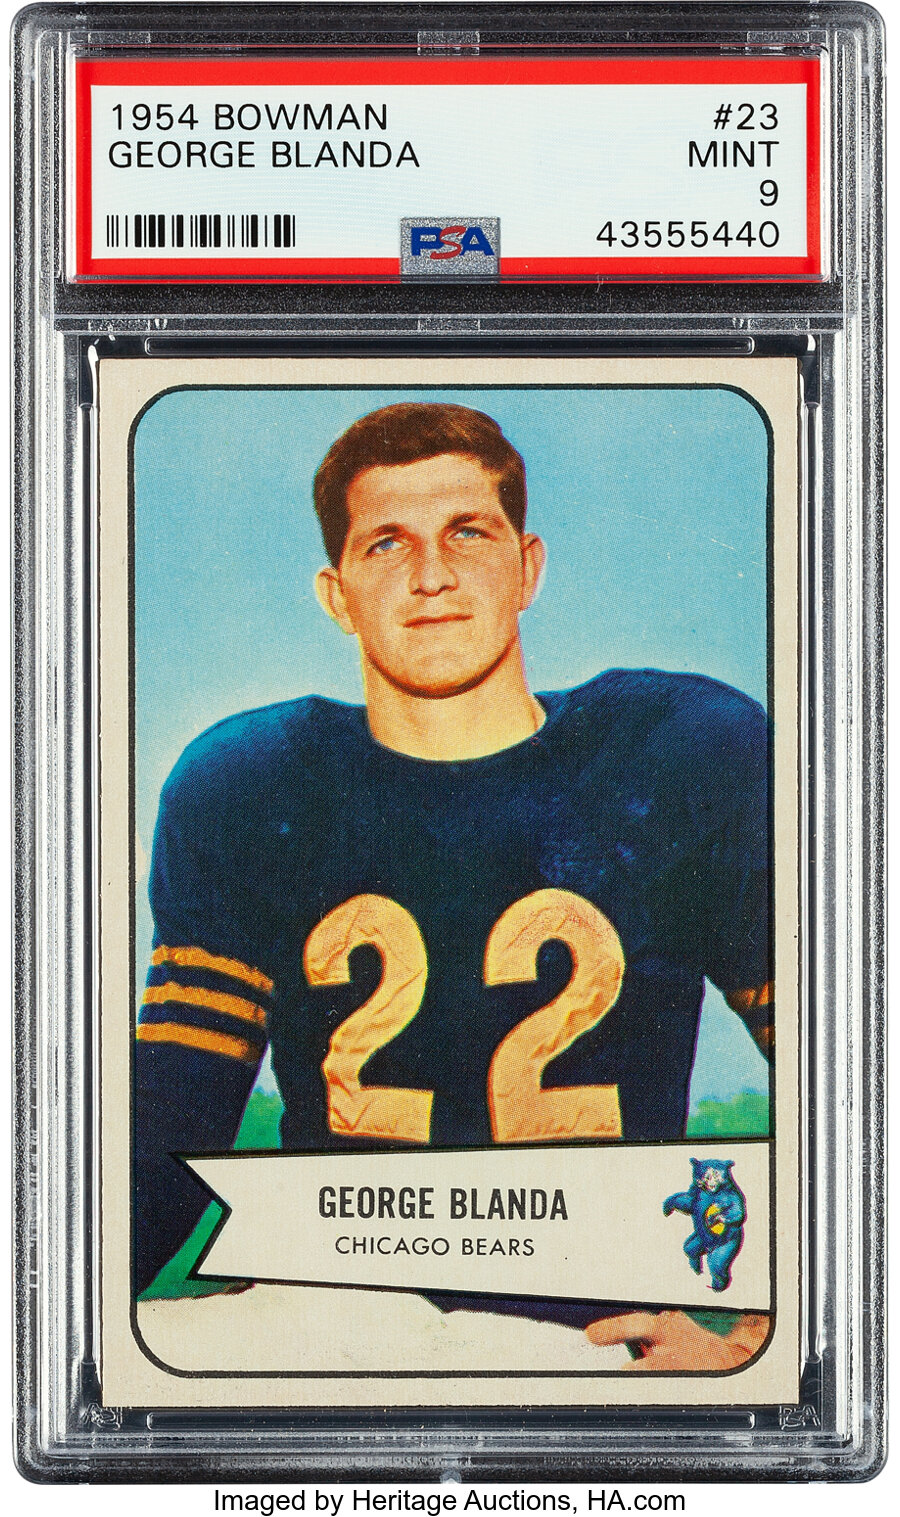 1954 Bowman George Blanda Rookie #23 PSA Mint 9 - None Higher!